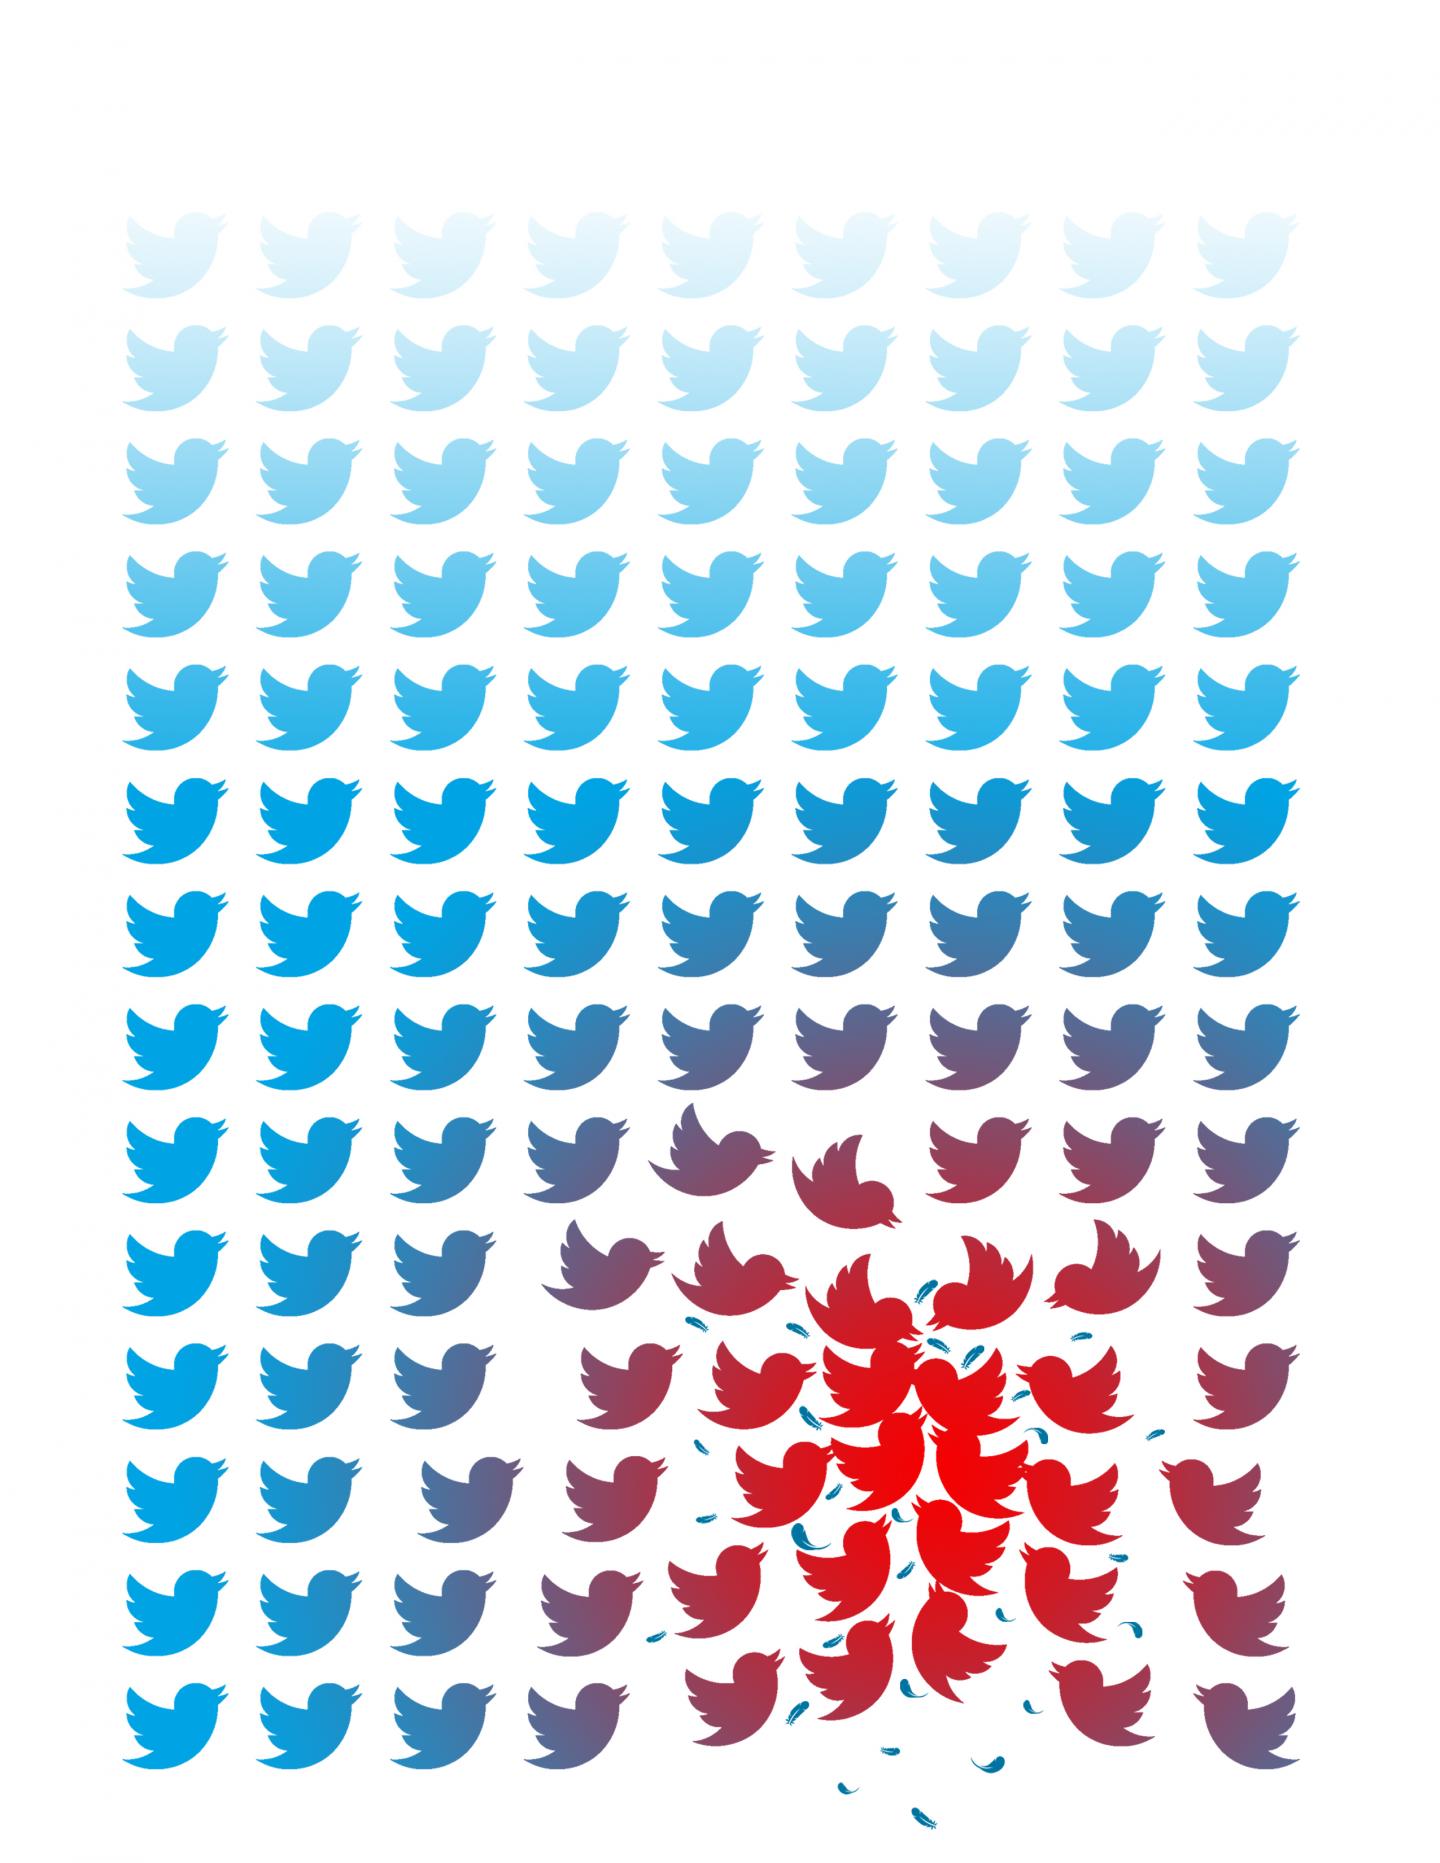 Moralized Tweets Indicate Escalation Toward Violence